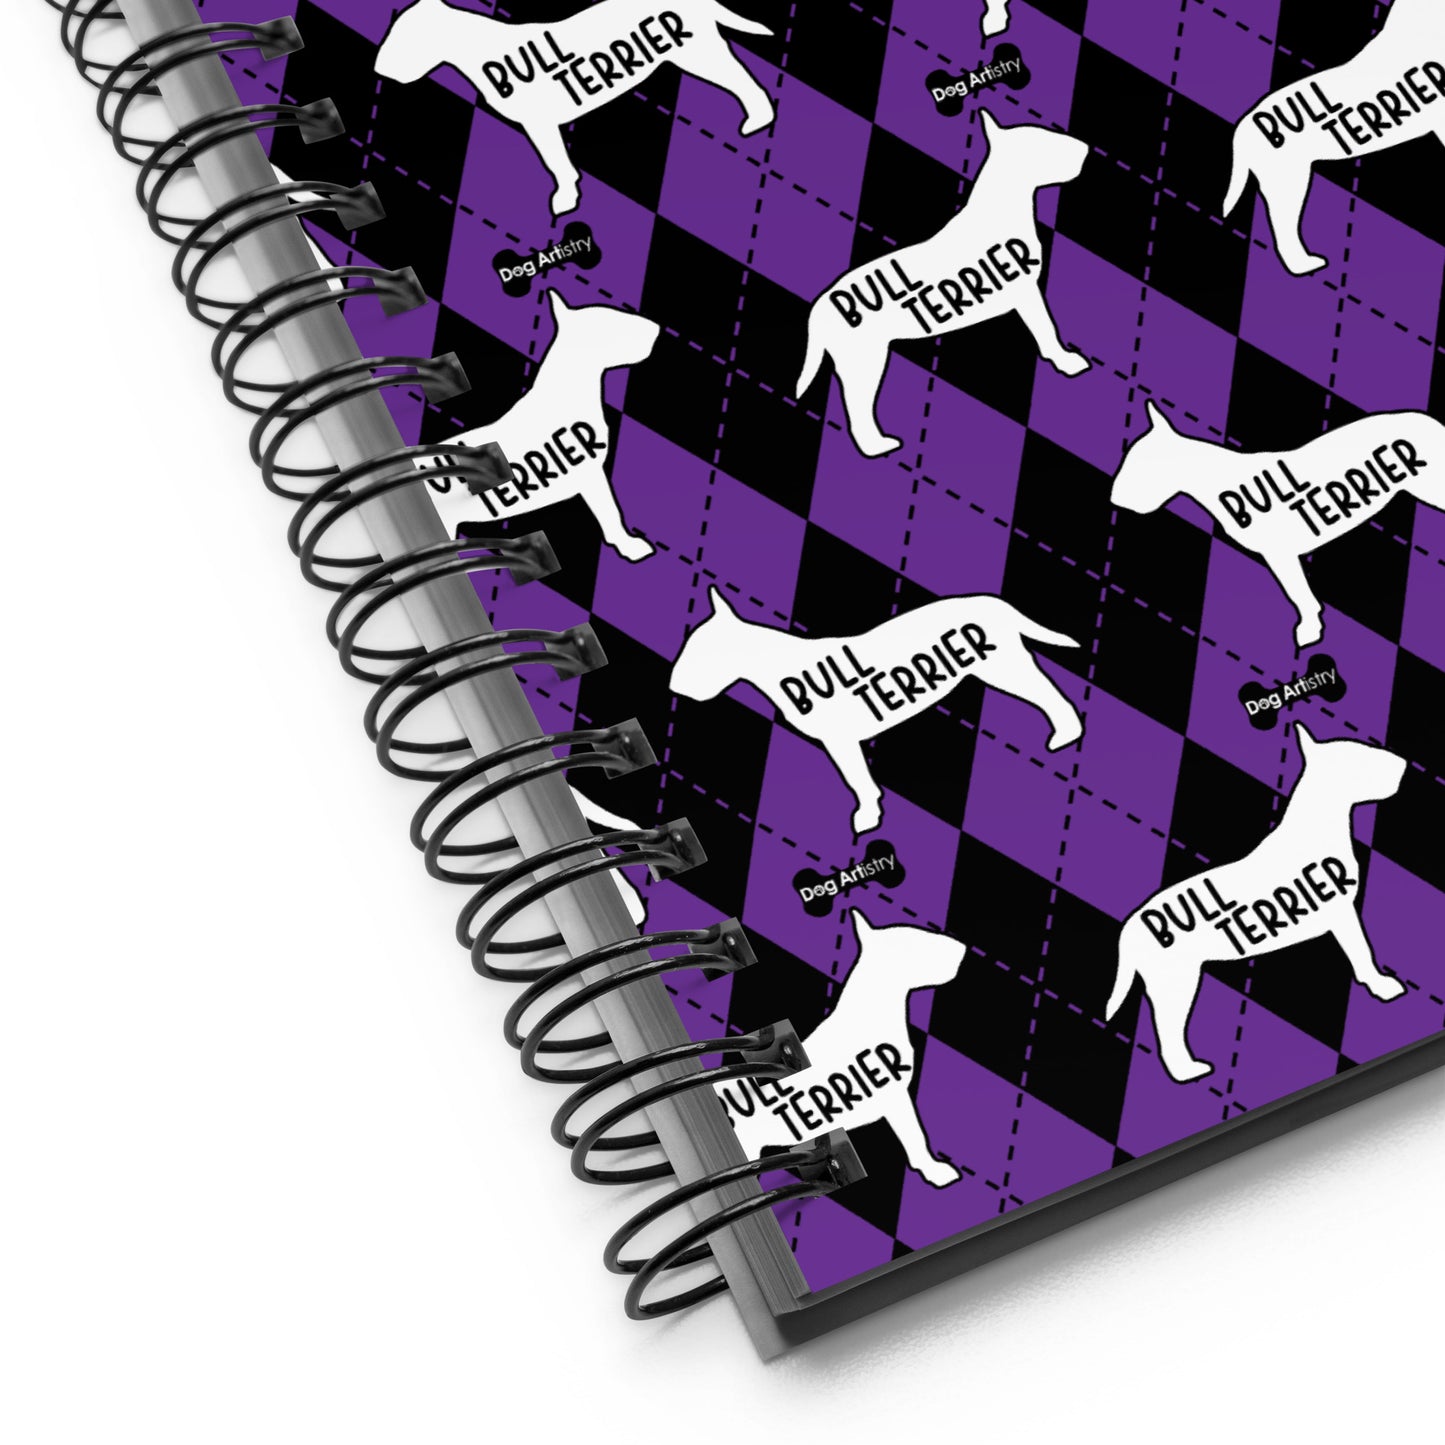 Bull Terrier Argyle Purple and Black Spiral Notebooks